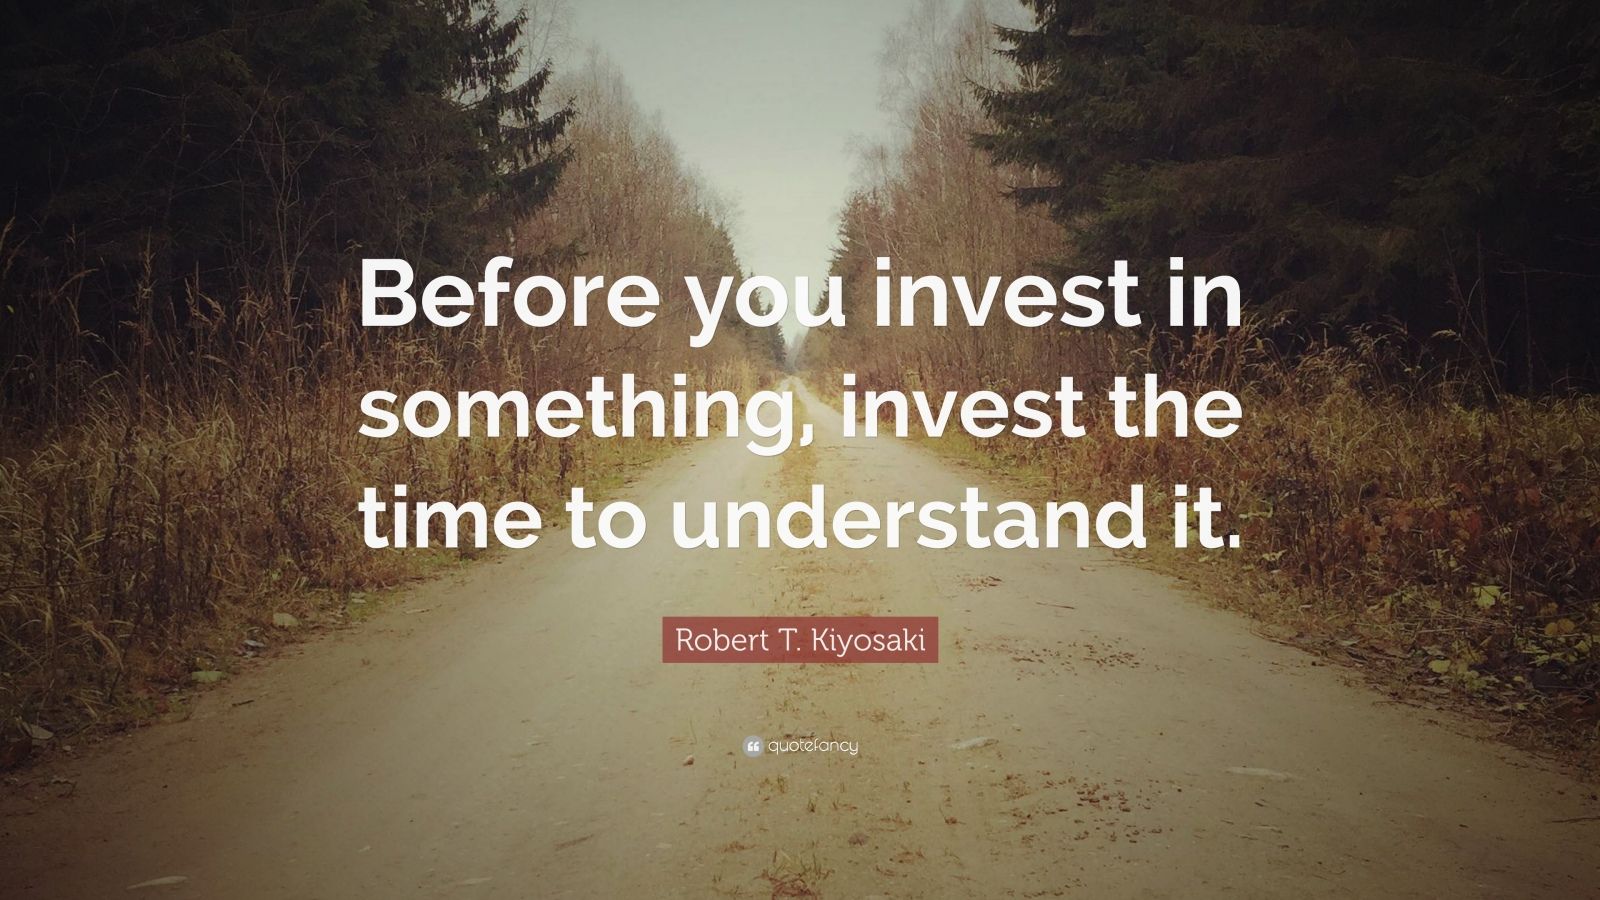 Robert T. Kiyosaki Quote “Before you invest in something